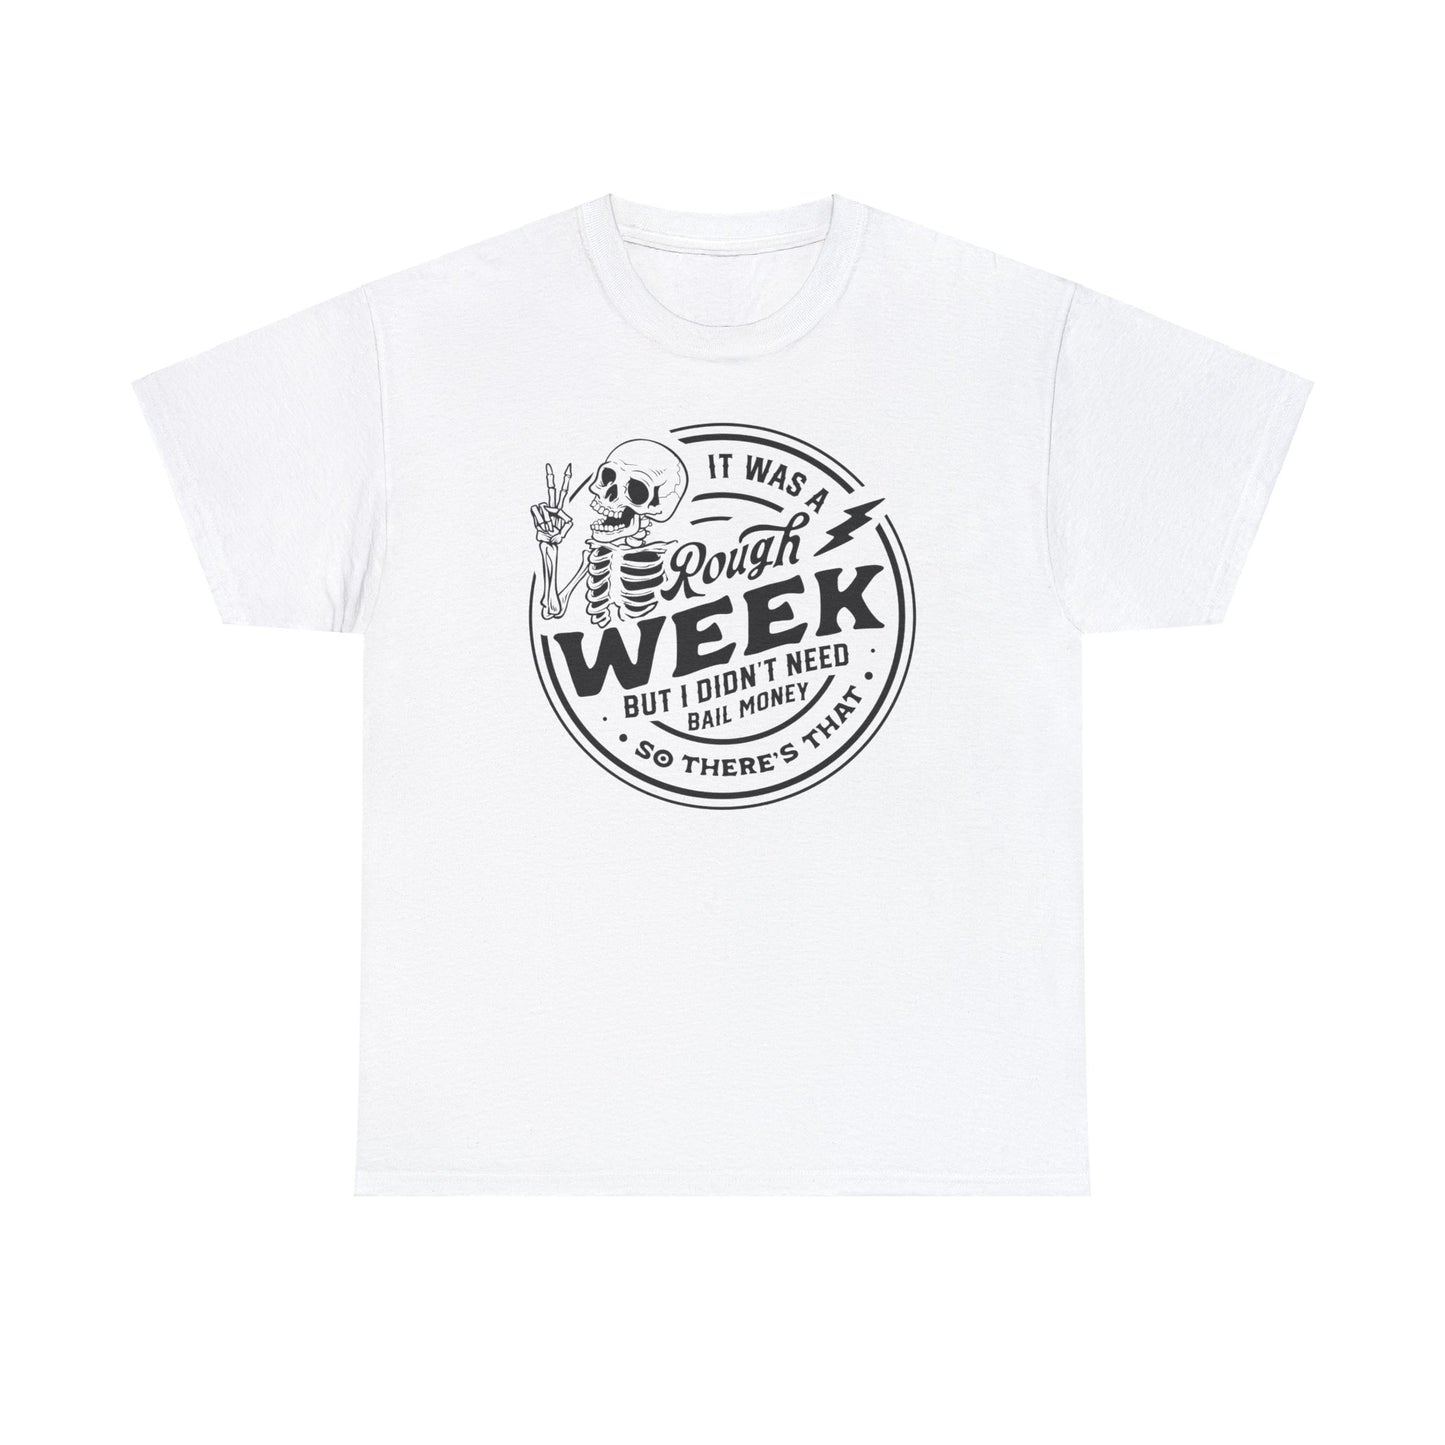 Rough Week T-Shirt For Bail Money T Shirt For Sarcastic Humor TShirt